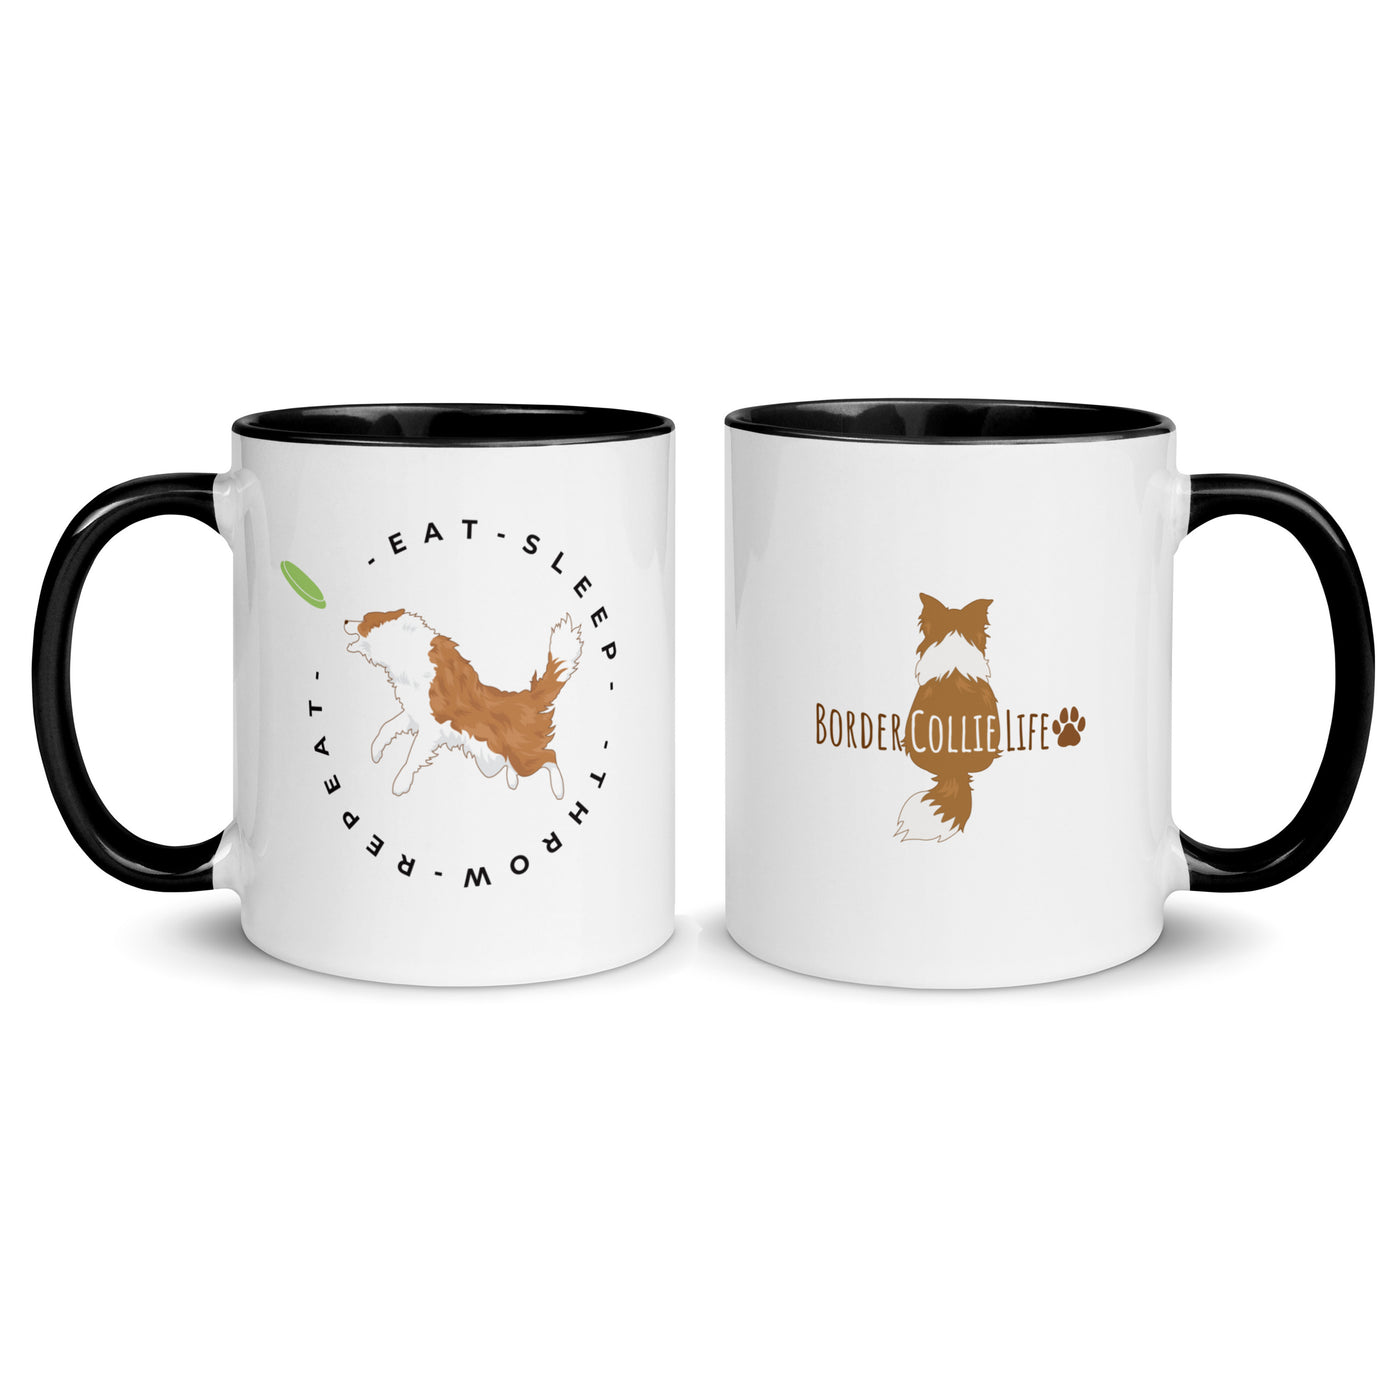 red border collie mugborder collie mug | Eat sleep throw repeat border collie mug | disc dog coffee mug | Agility dog border collie | frisbee dog border collie